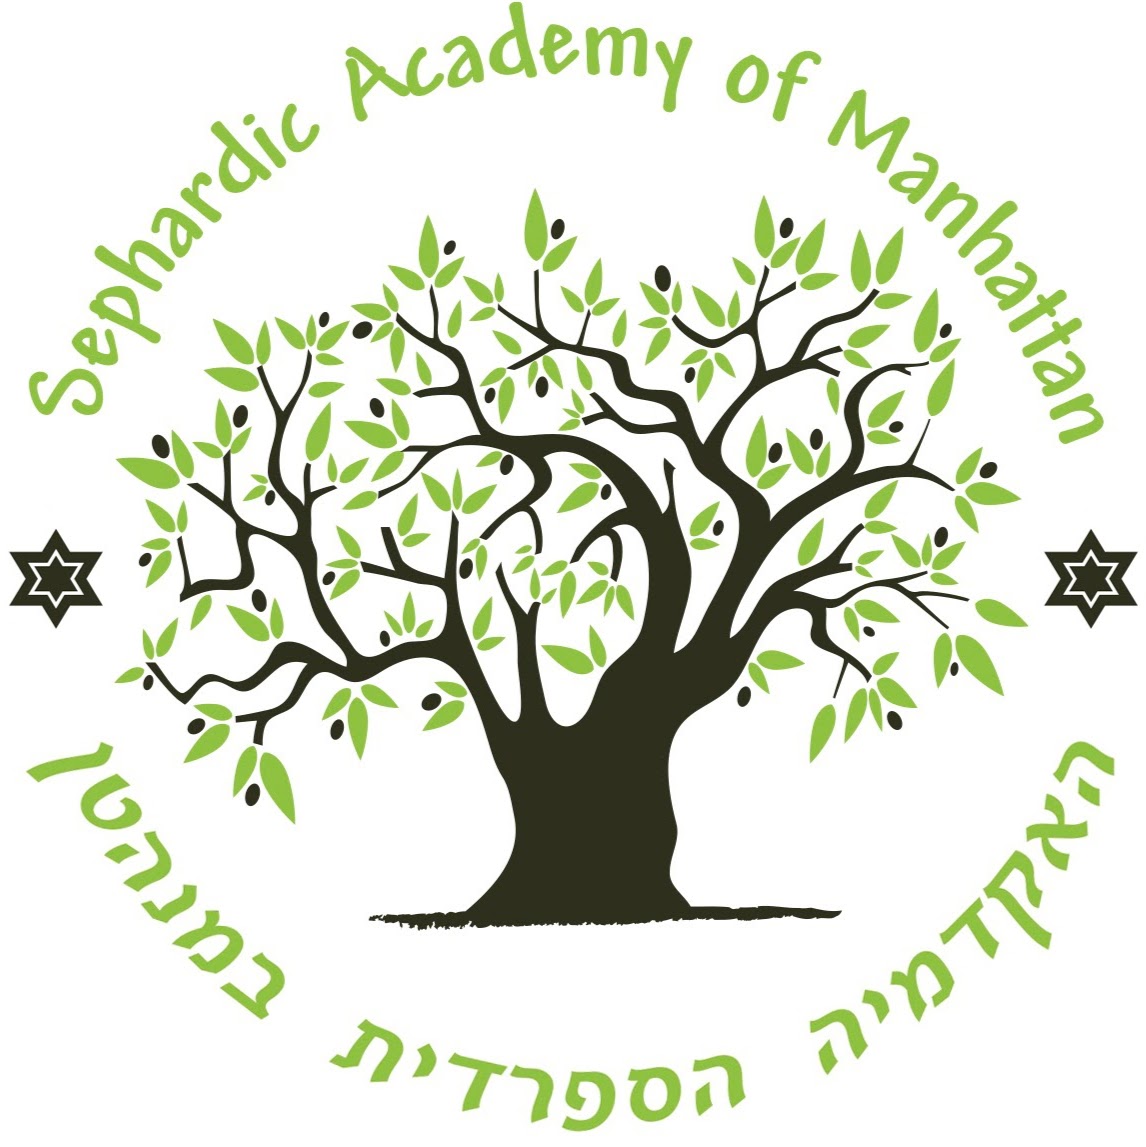 Photo of Sephardic Academy of Manhattan in New York City, New York, United States - 1 Picture of Point of interest, Establishment, School